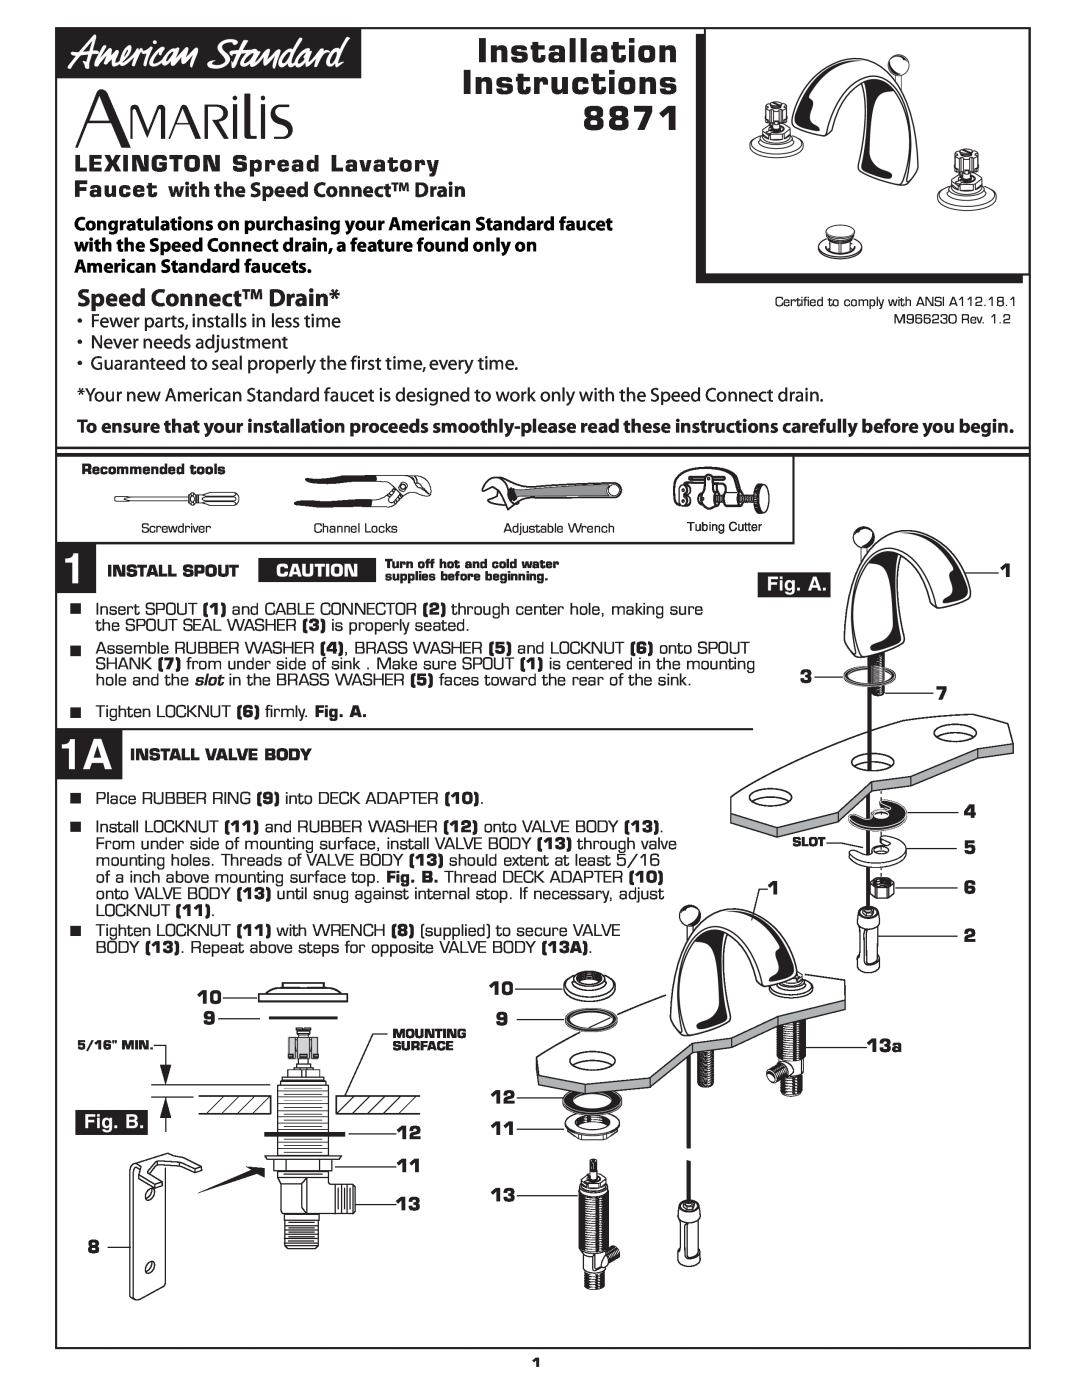 American Standard 8871 installation instructions Speed Connect Drain, LEXINGTON Spread Lavatory, Installation Instructions 